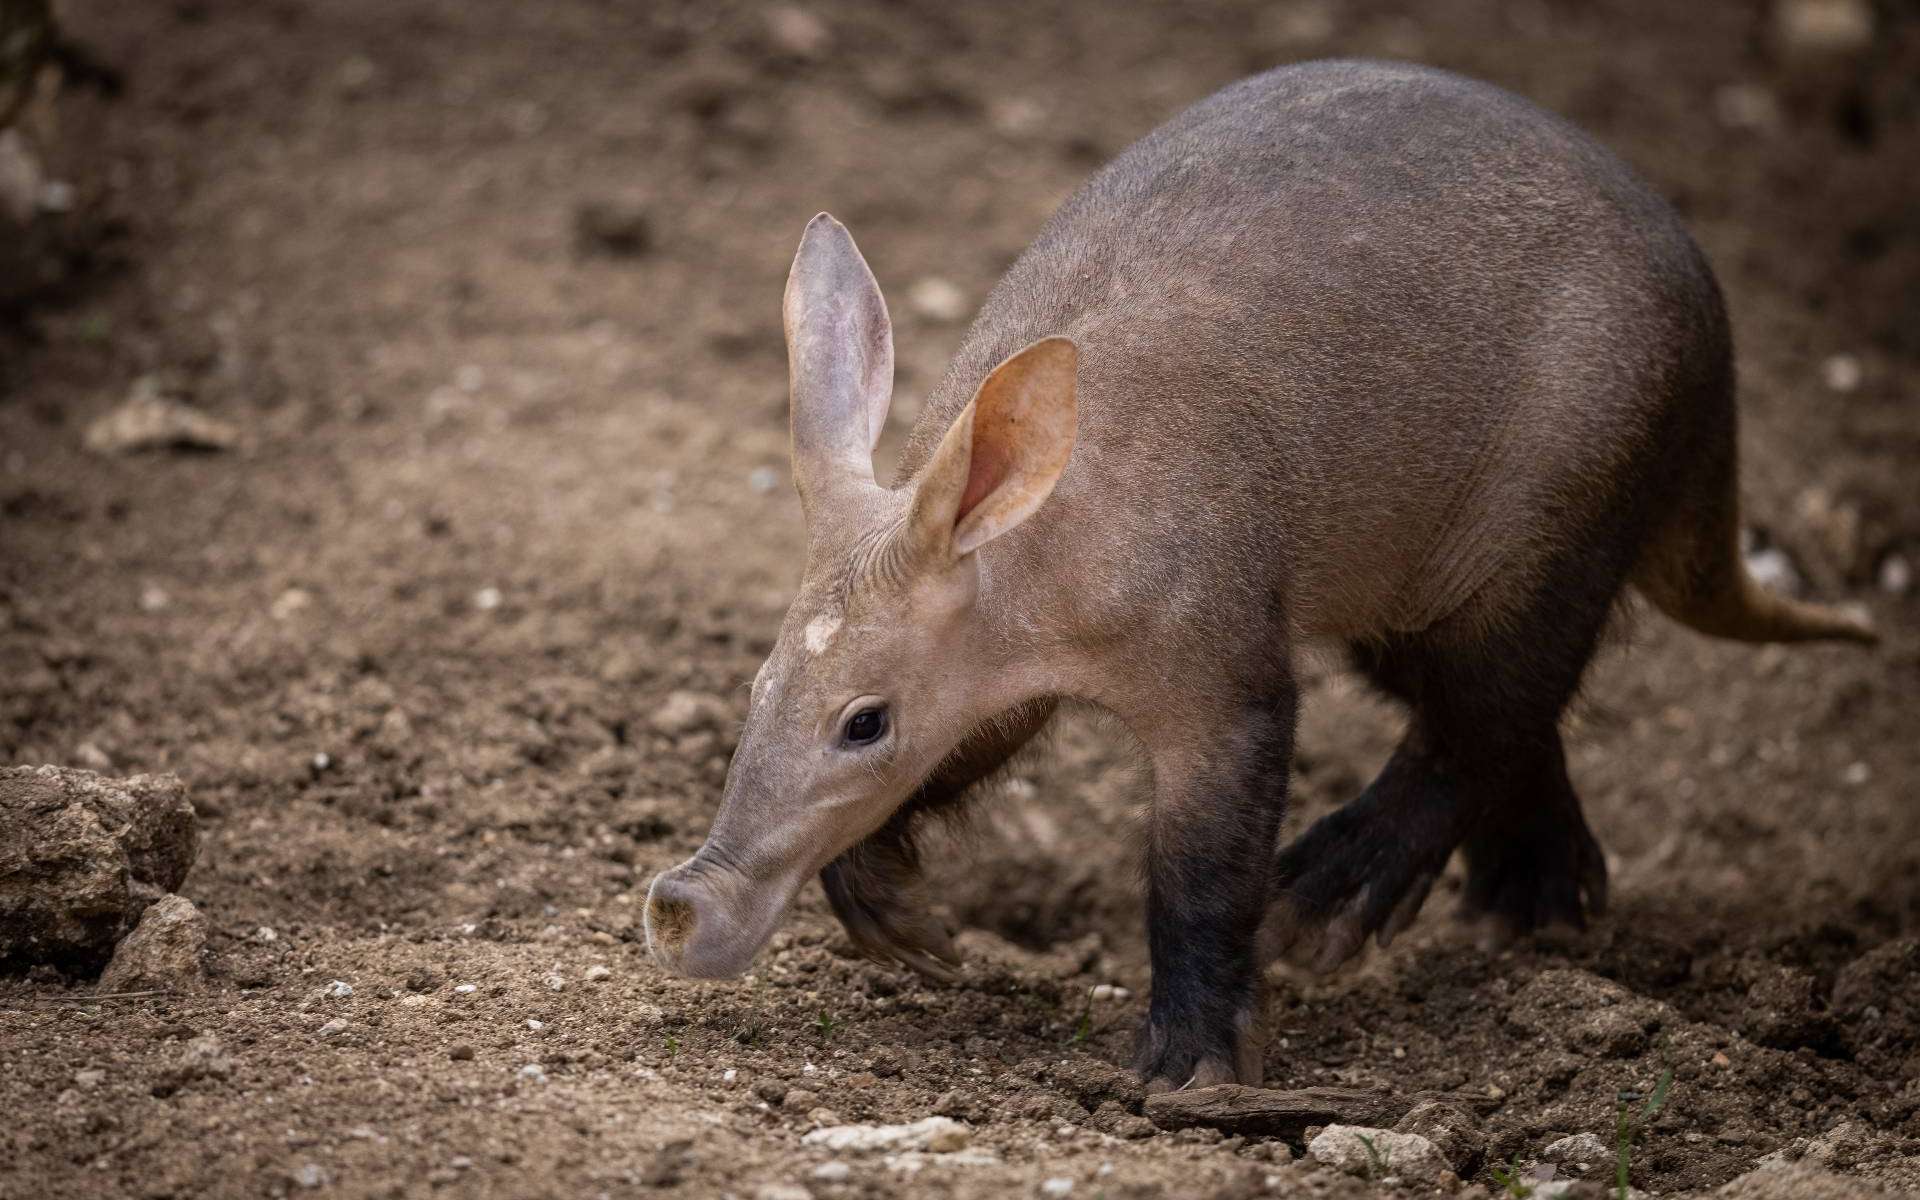 Étrangeté du vivant : l'oryctérope, un animal discret mi-kangourou mi-cochon